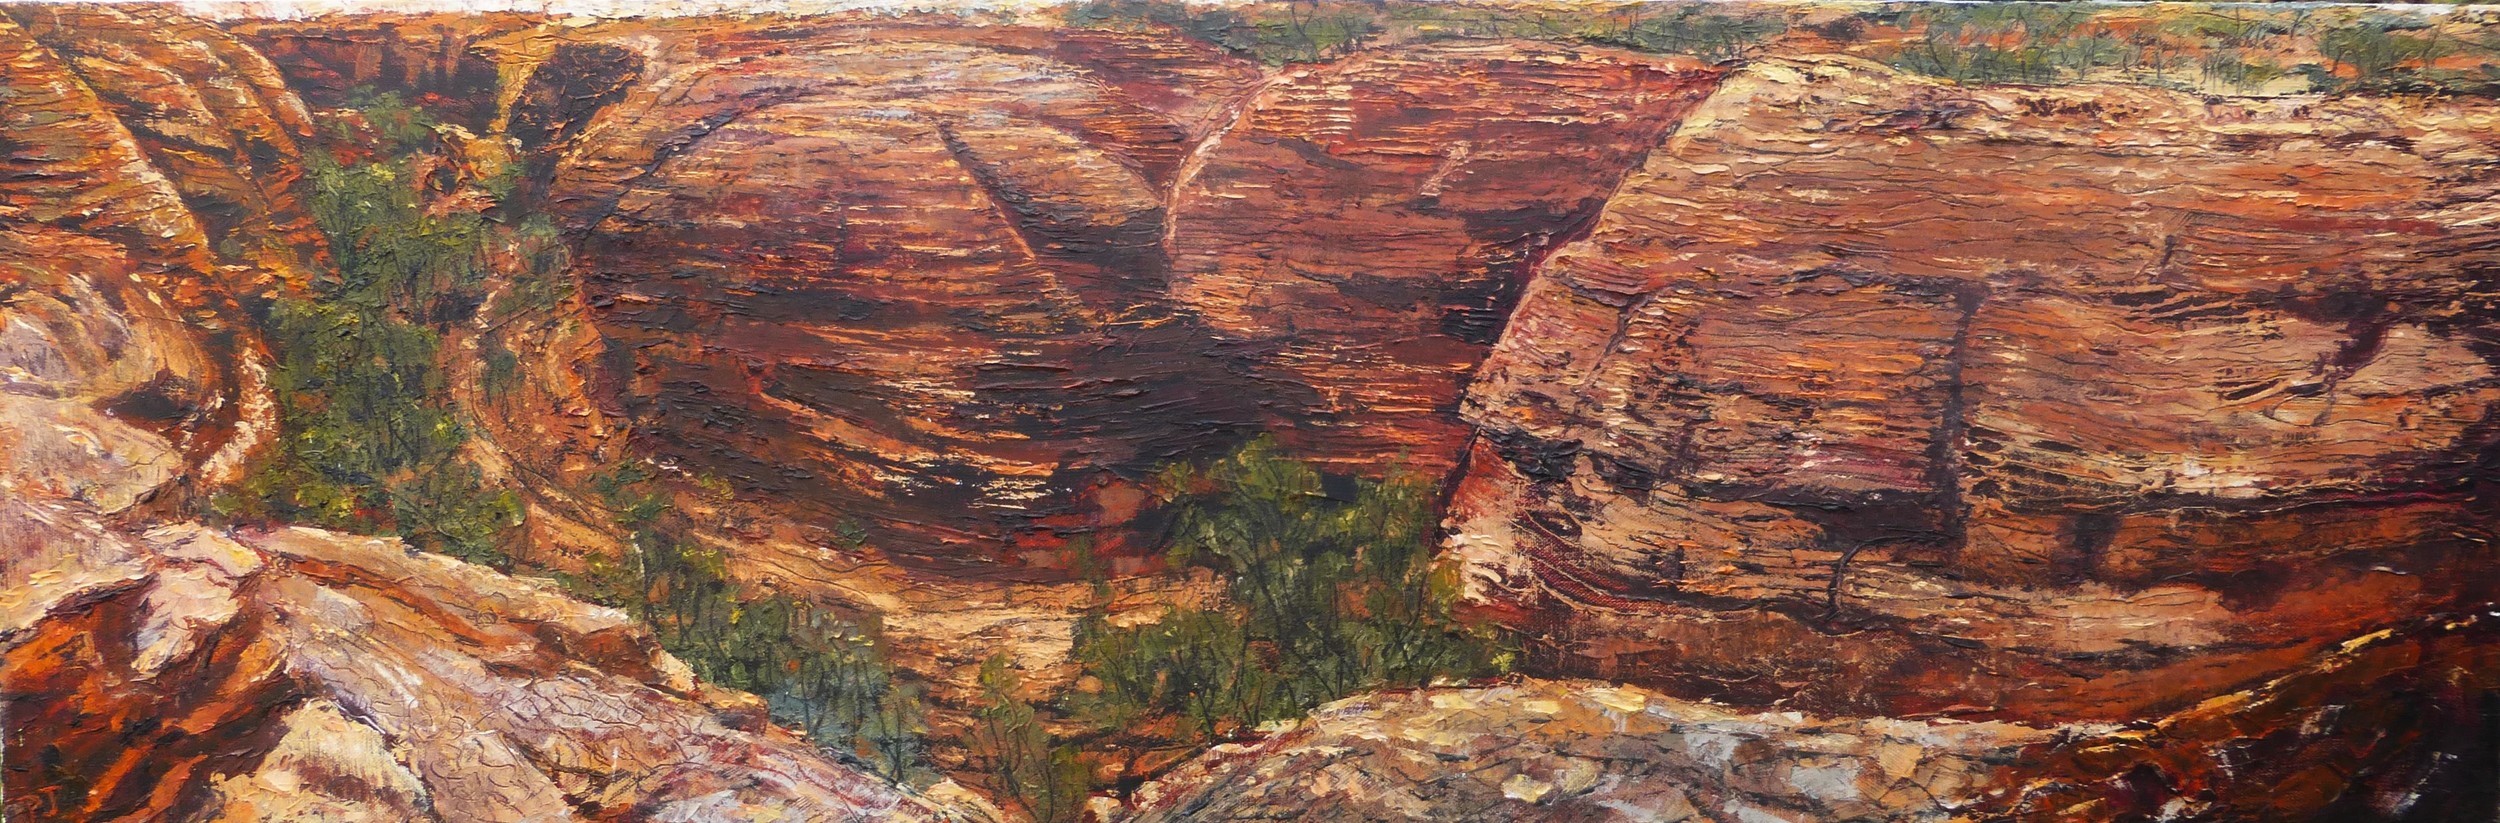 The Lost City, Australia, oil on canvas